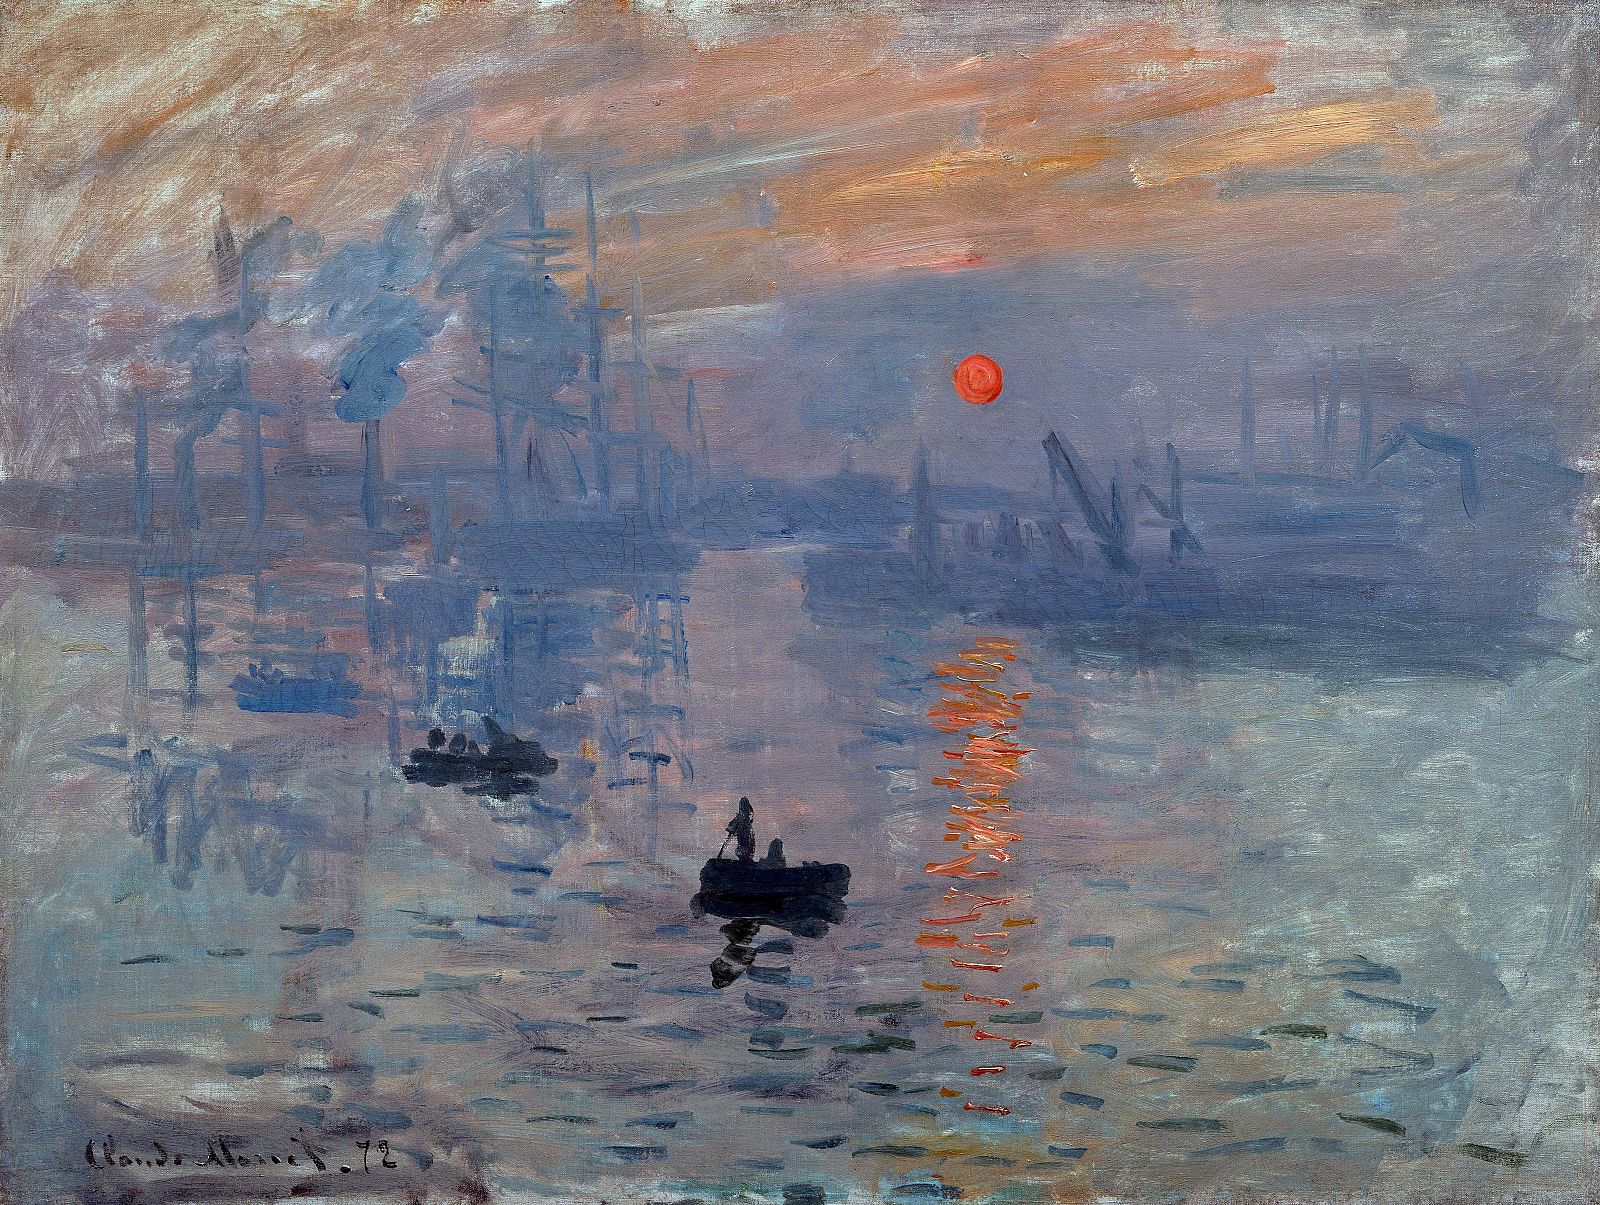 Claude Monet, "Impression, soleil levant" (1872)